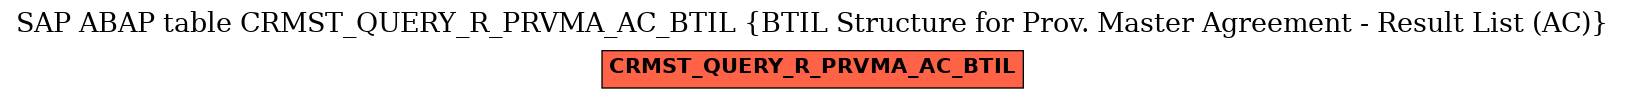 E-R Diagram for table CRMST_QUERY_R_PRVMA_AC_BTIL (BTIL Structure for Prov. Master Agreement - Result List (AC))